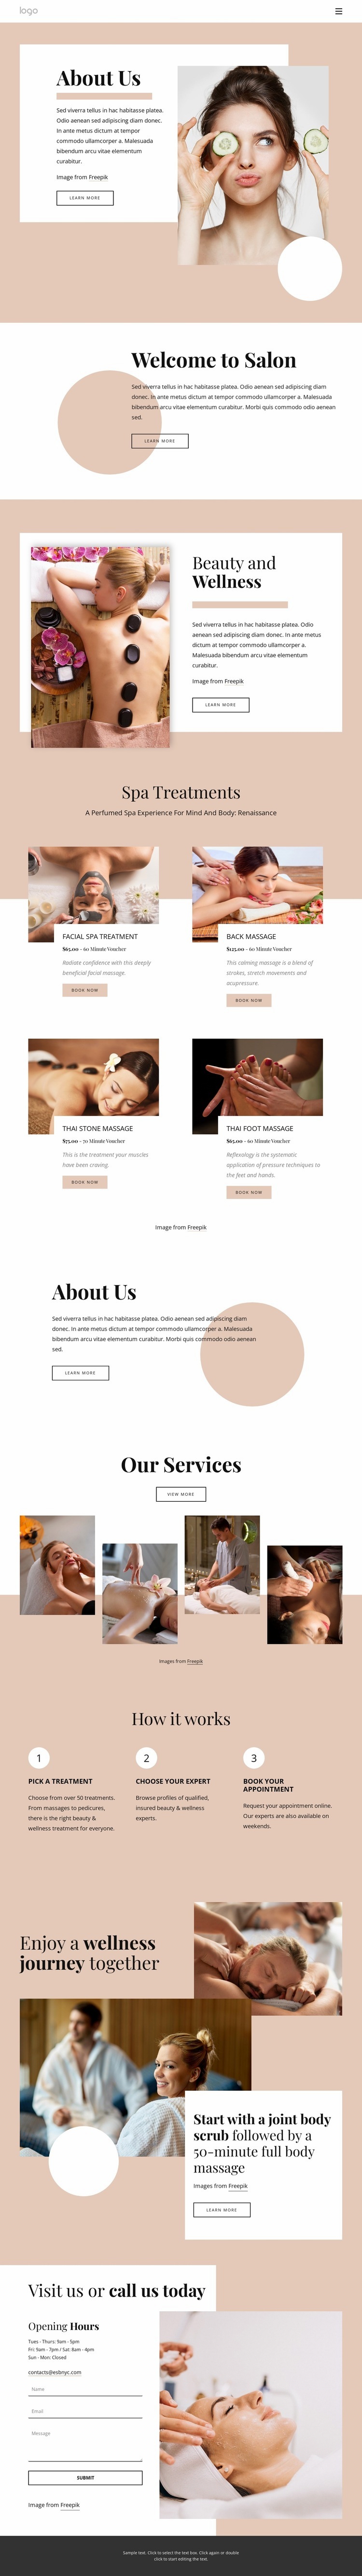 About the spa salon Web Page Design